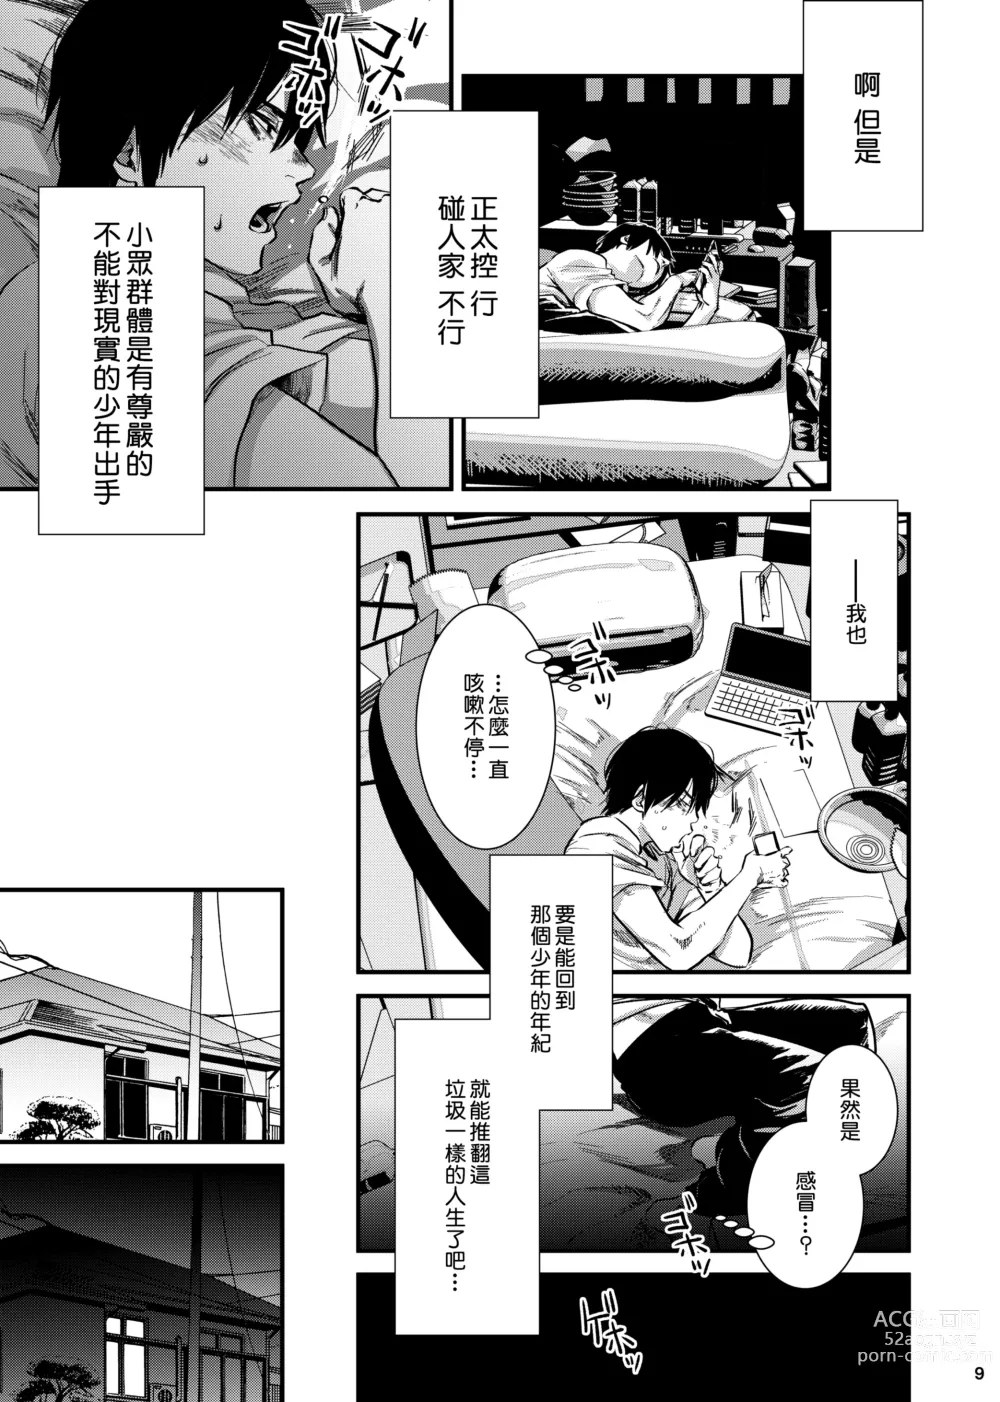 Page 8 of doujinshi SHOTA-CON syndrome